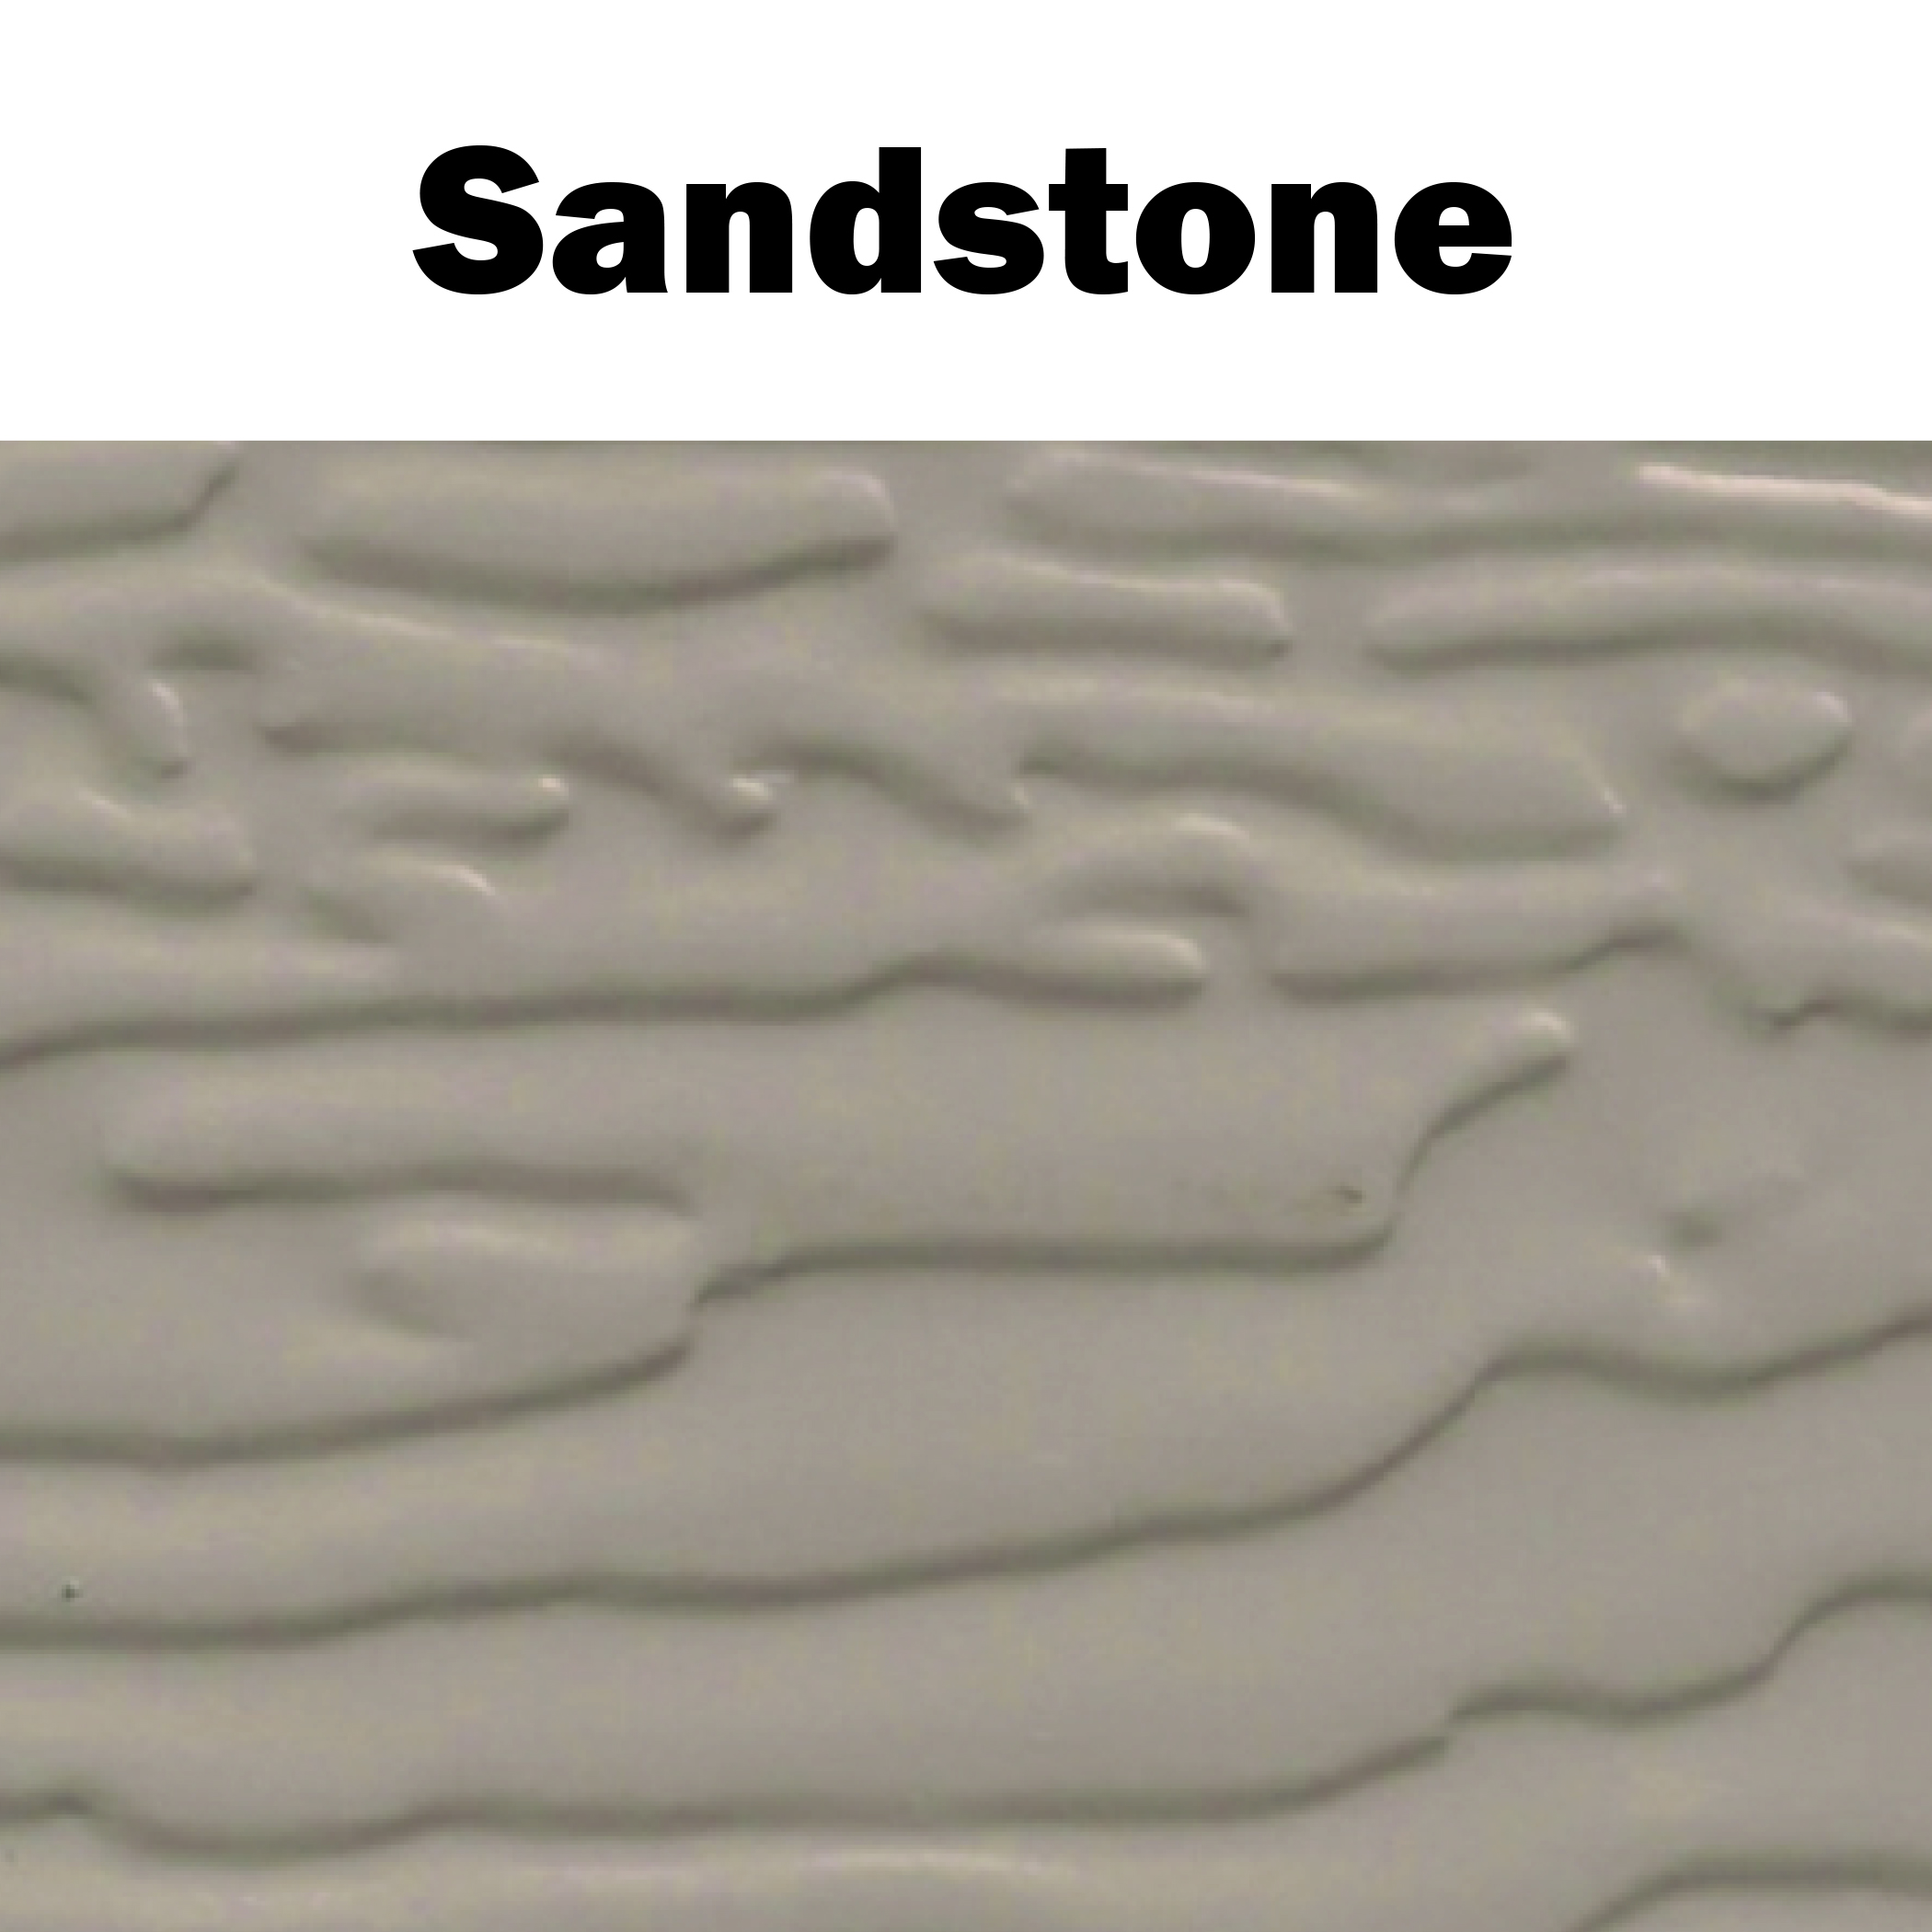 Sandstone.jpg